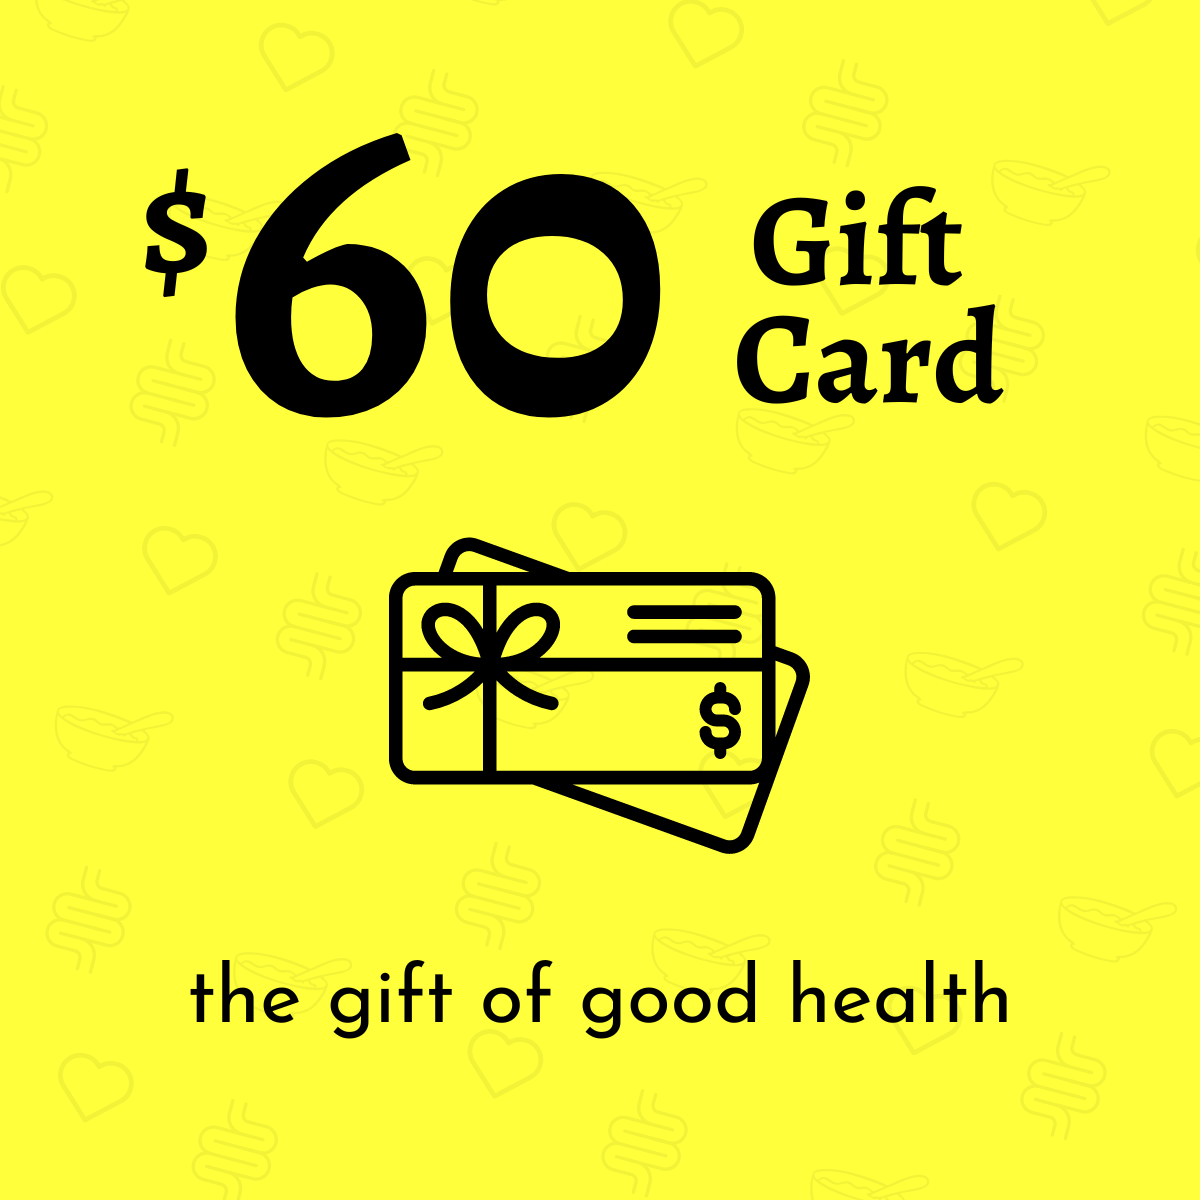 $60 Gift Card